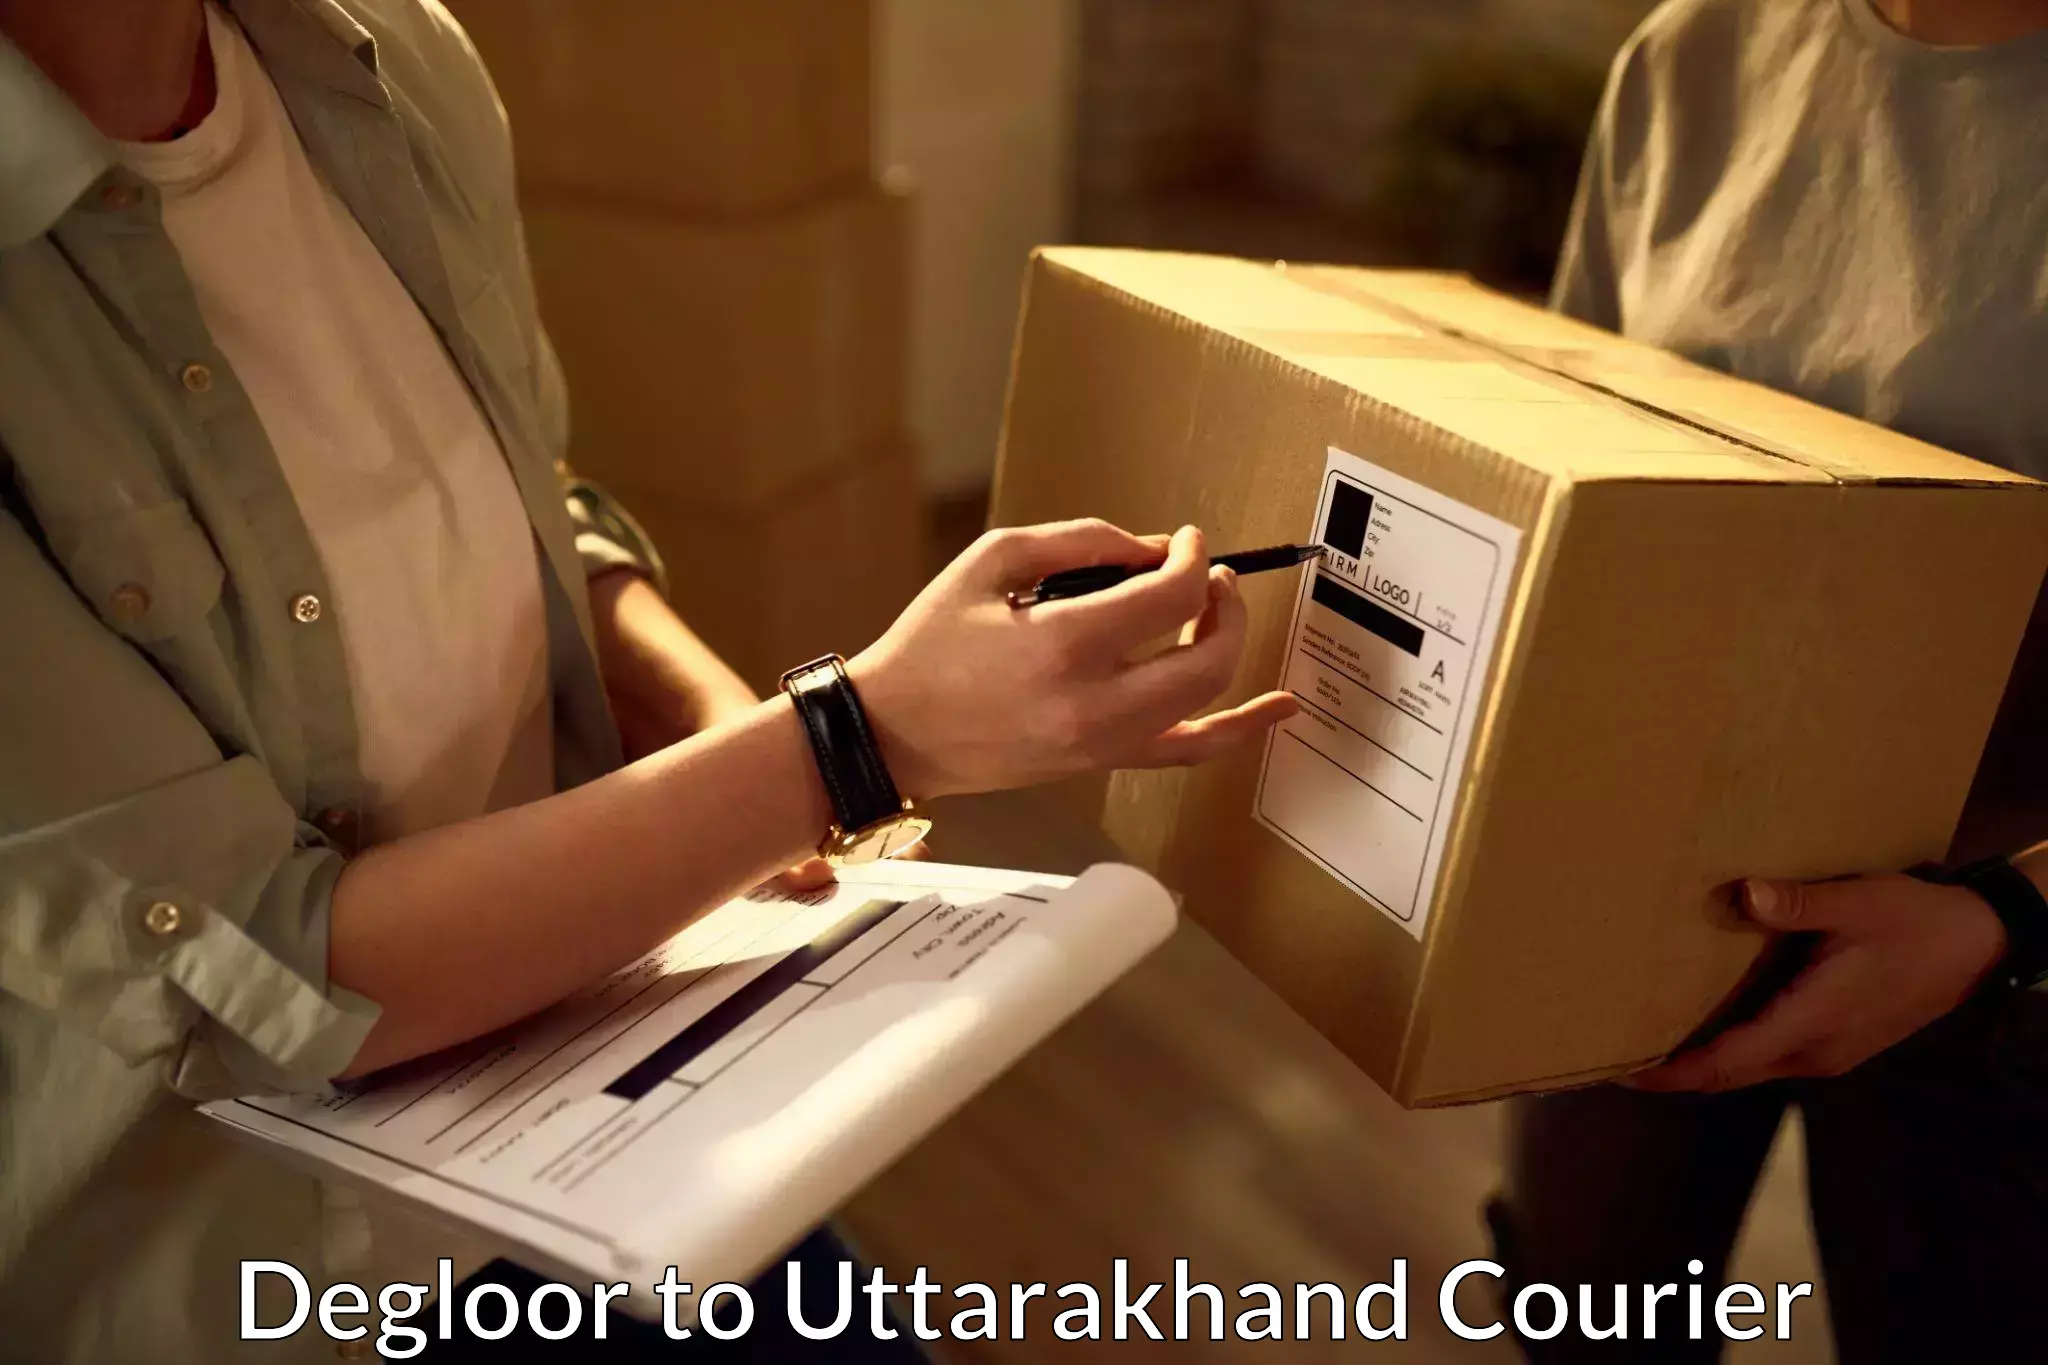 Online courier booking Degloor to Uttarakhand